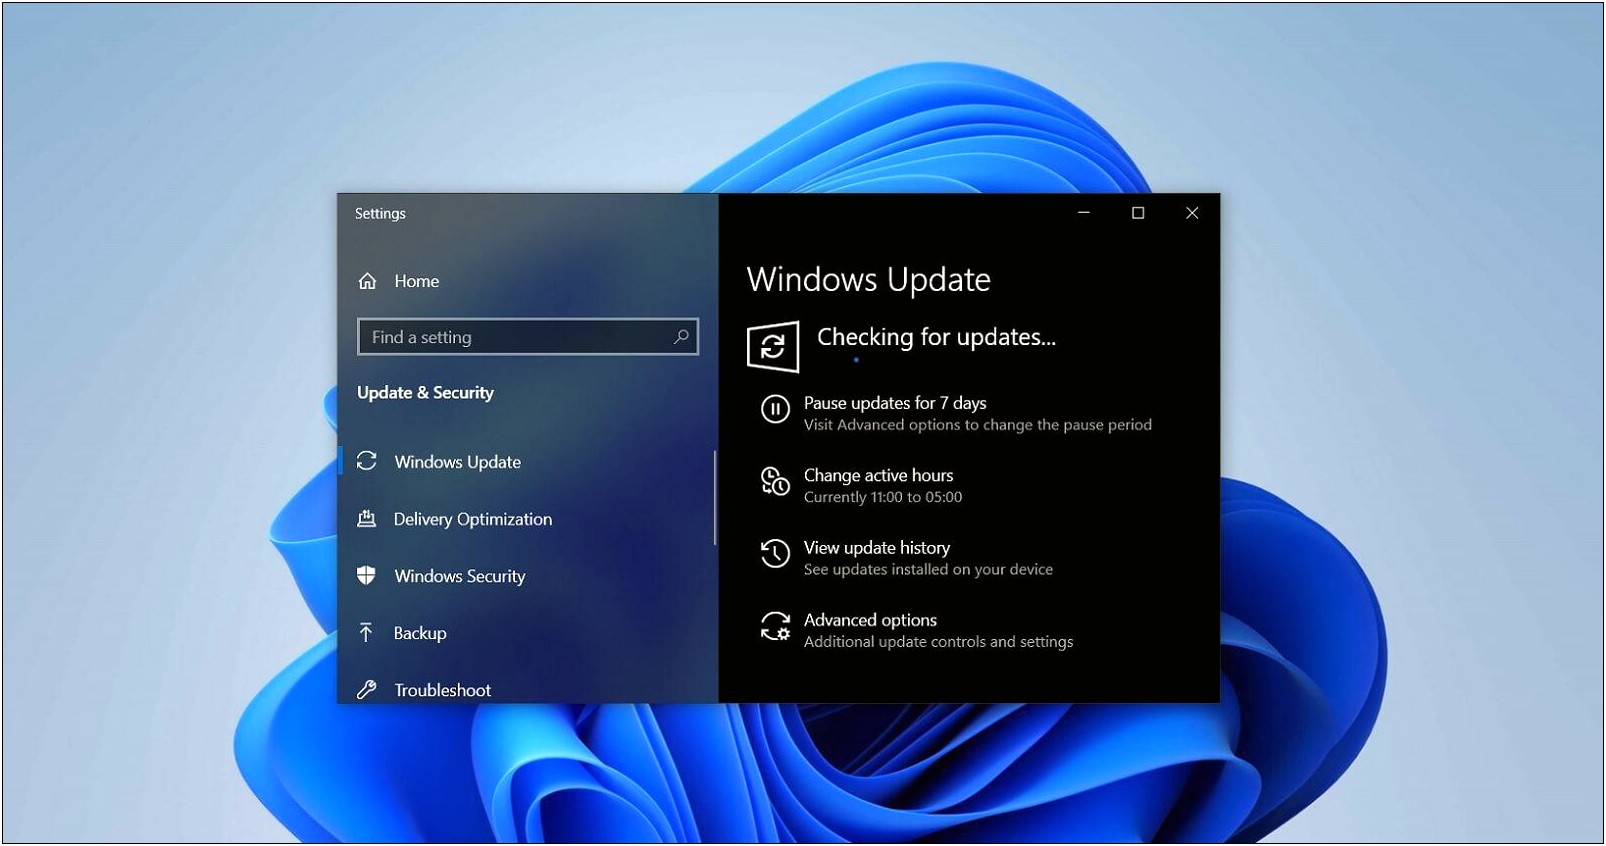 Download Admx Templates Windows 10 1809